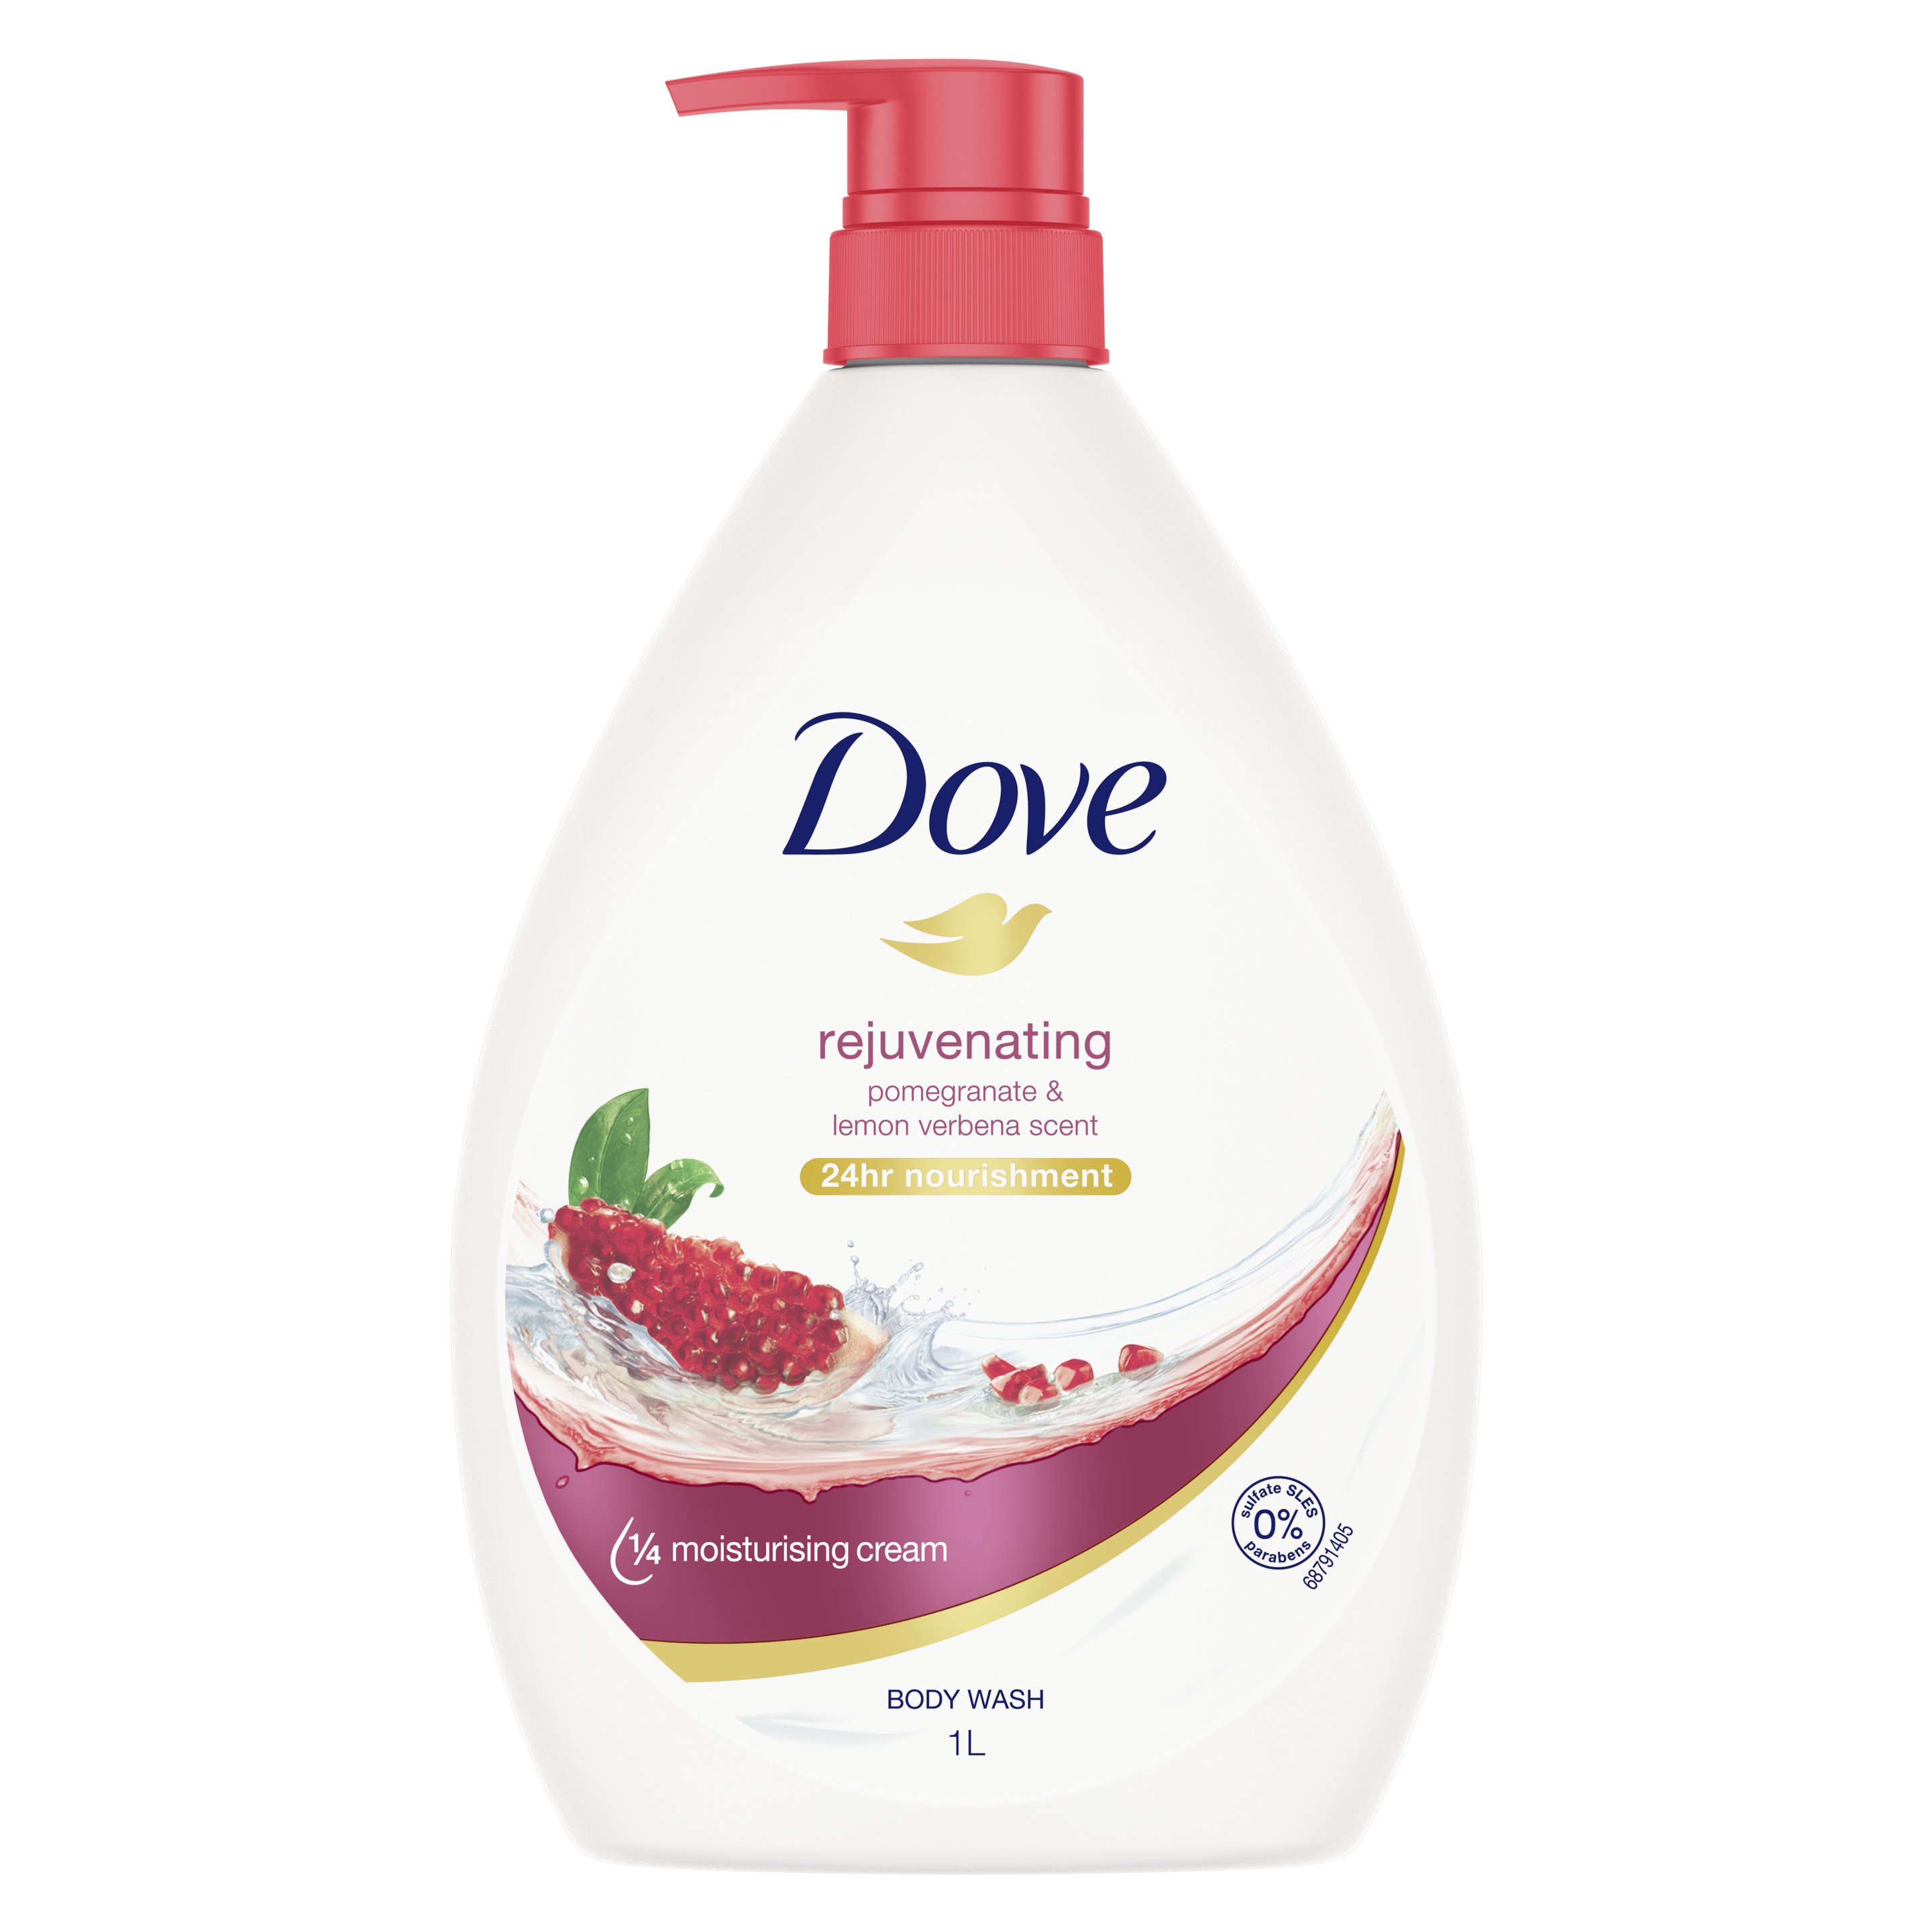 Dove Rejuvenating Pomegranate Body Wash 1L Text